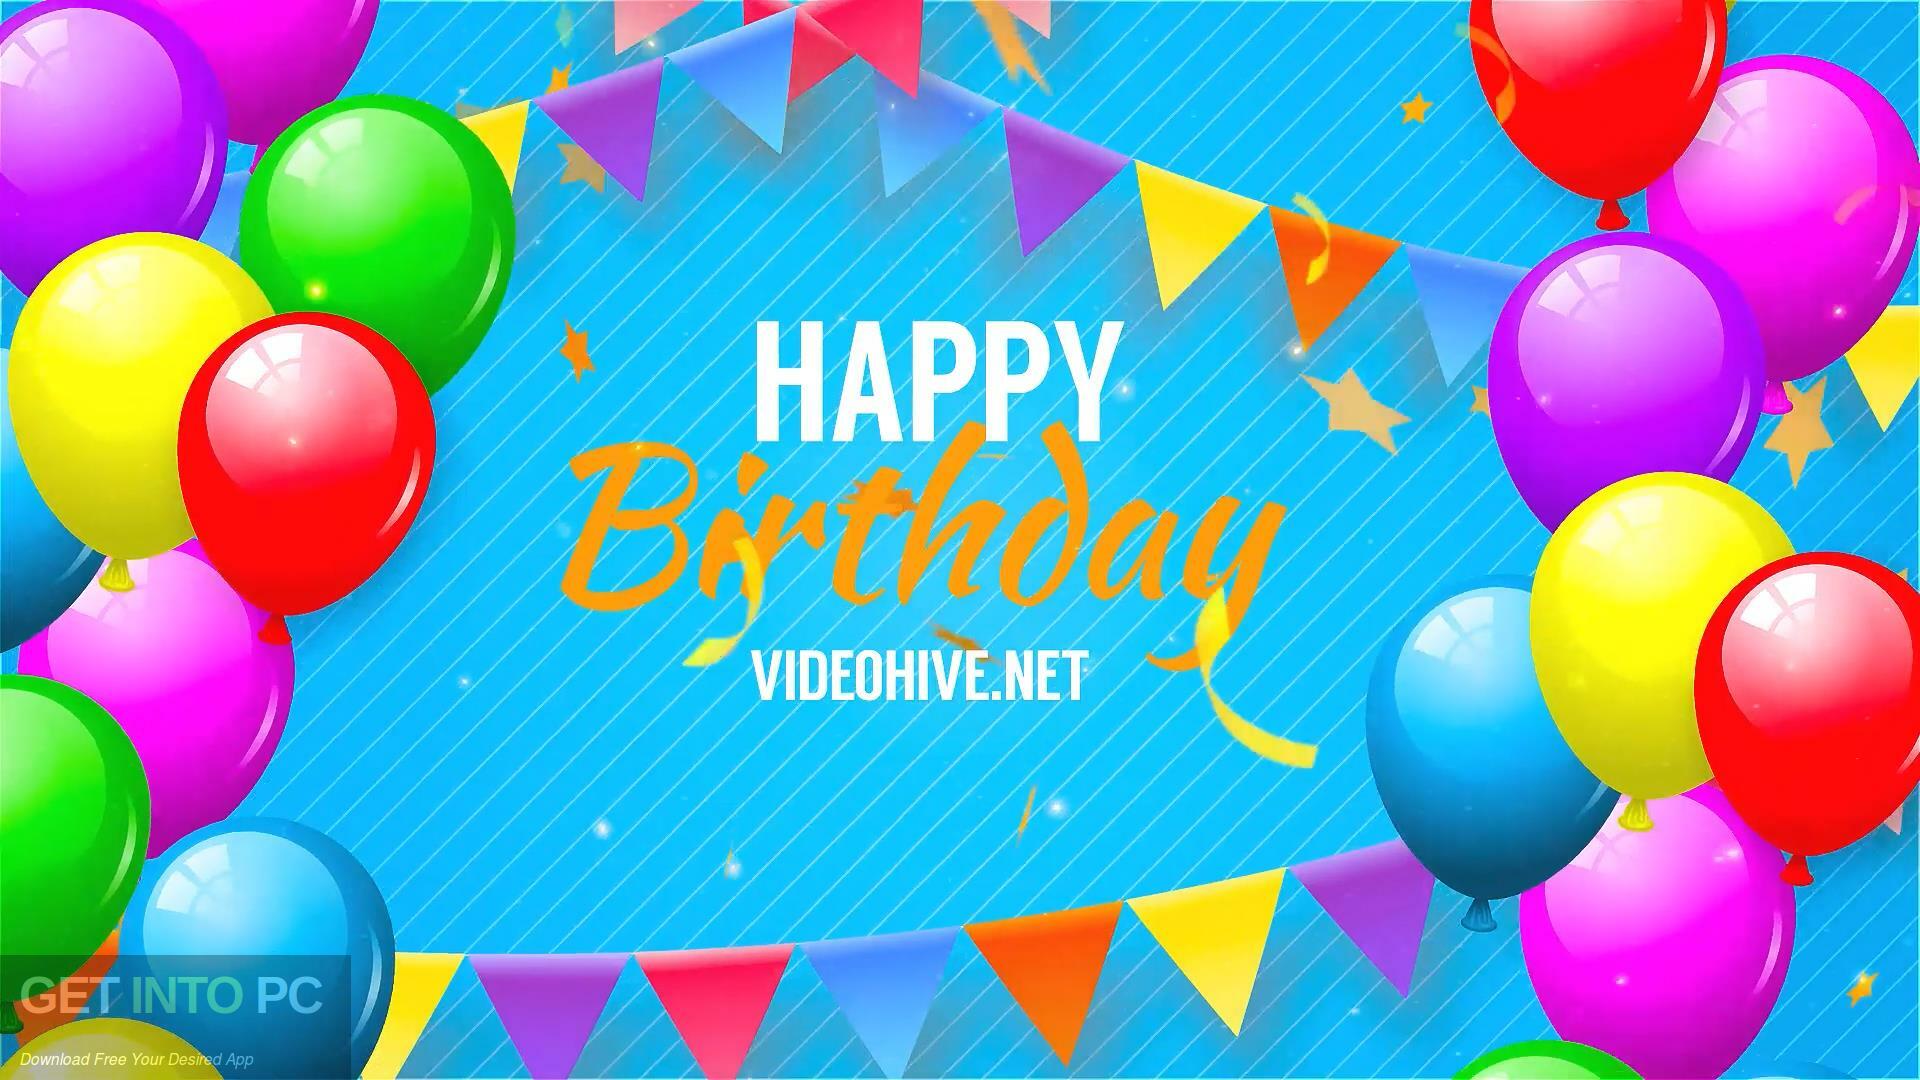 VideoHive - Kids Happy Birthday [AEP] Free Download